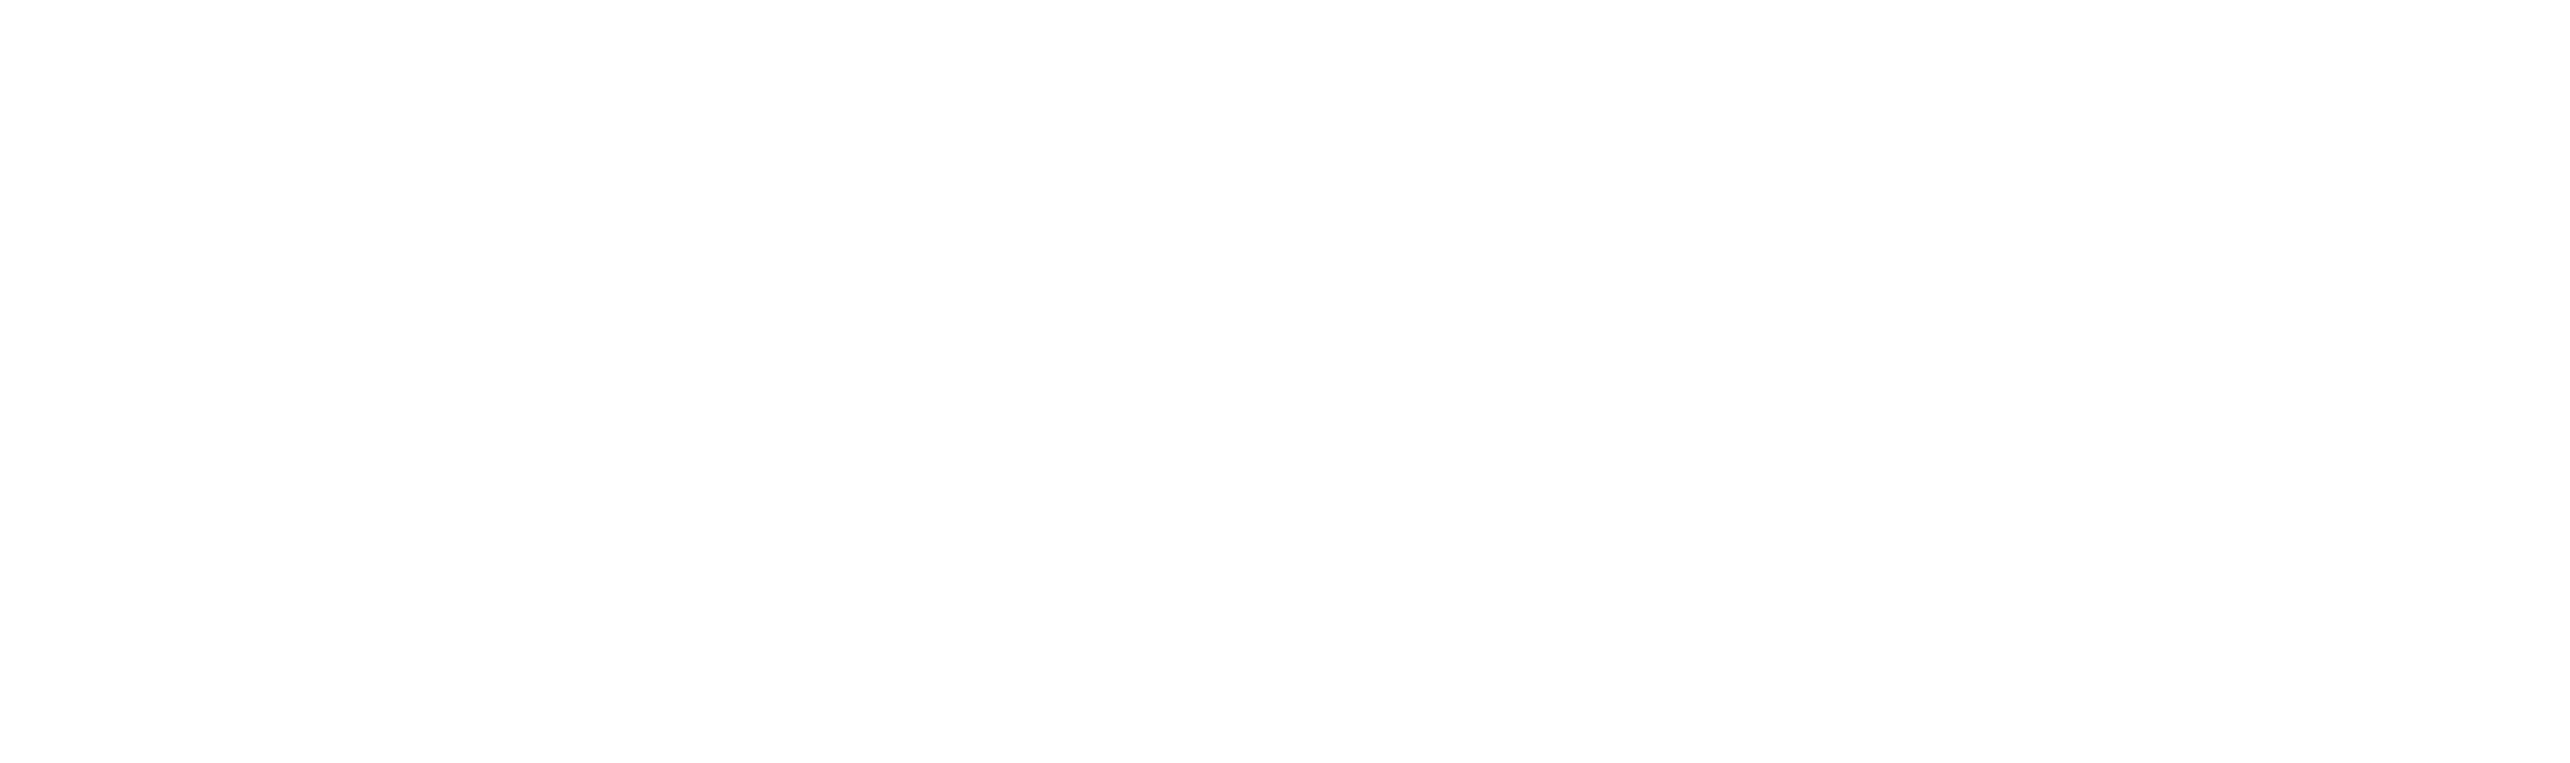 Valleyview_riverview-reverse